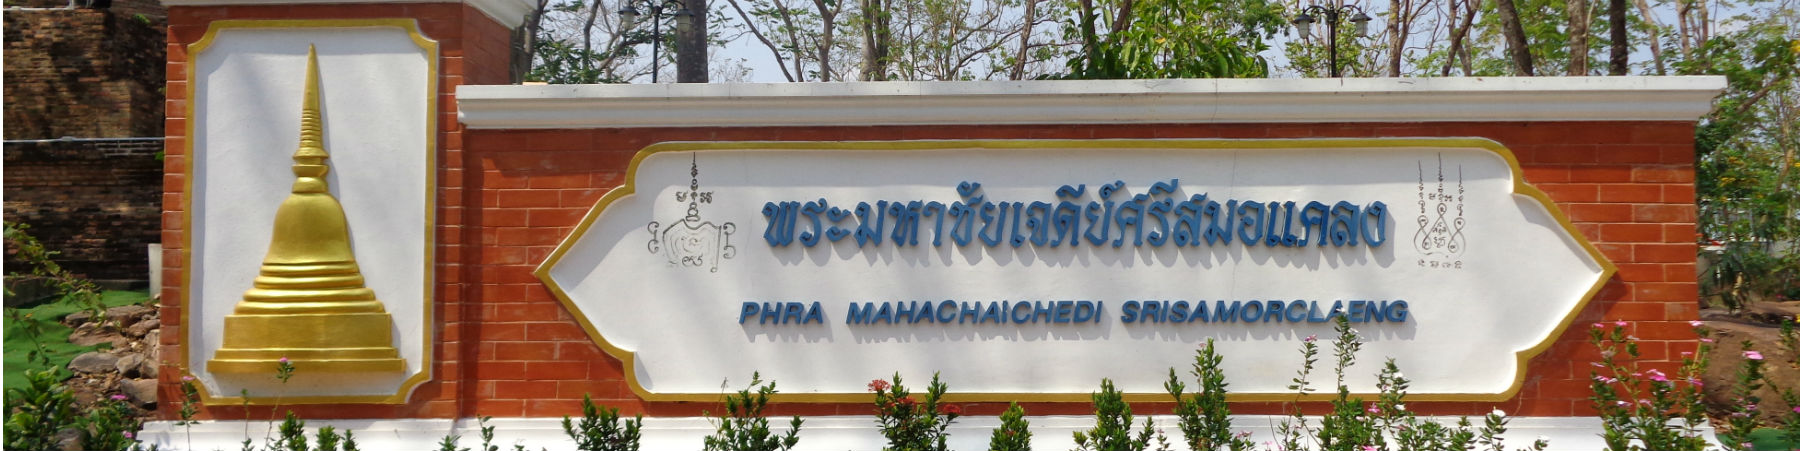 Phra Mahachaichedi Srisamorclaeng, Wang Thong District, Phitsanulok Province